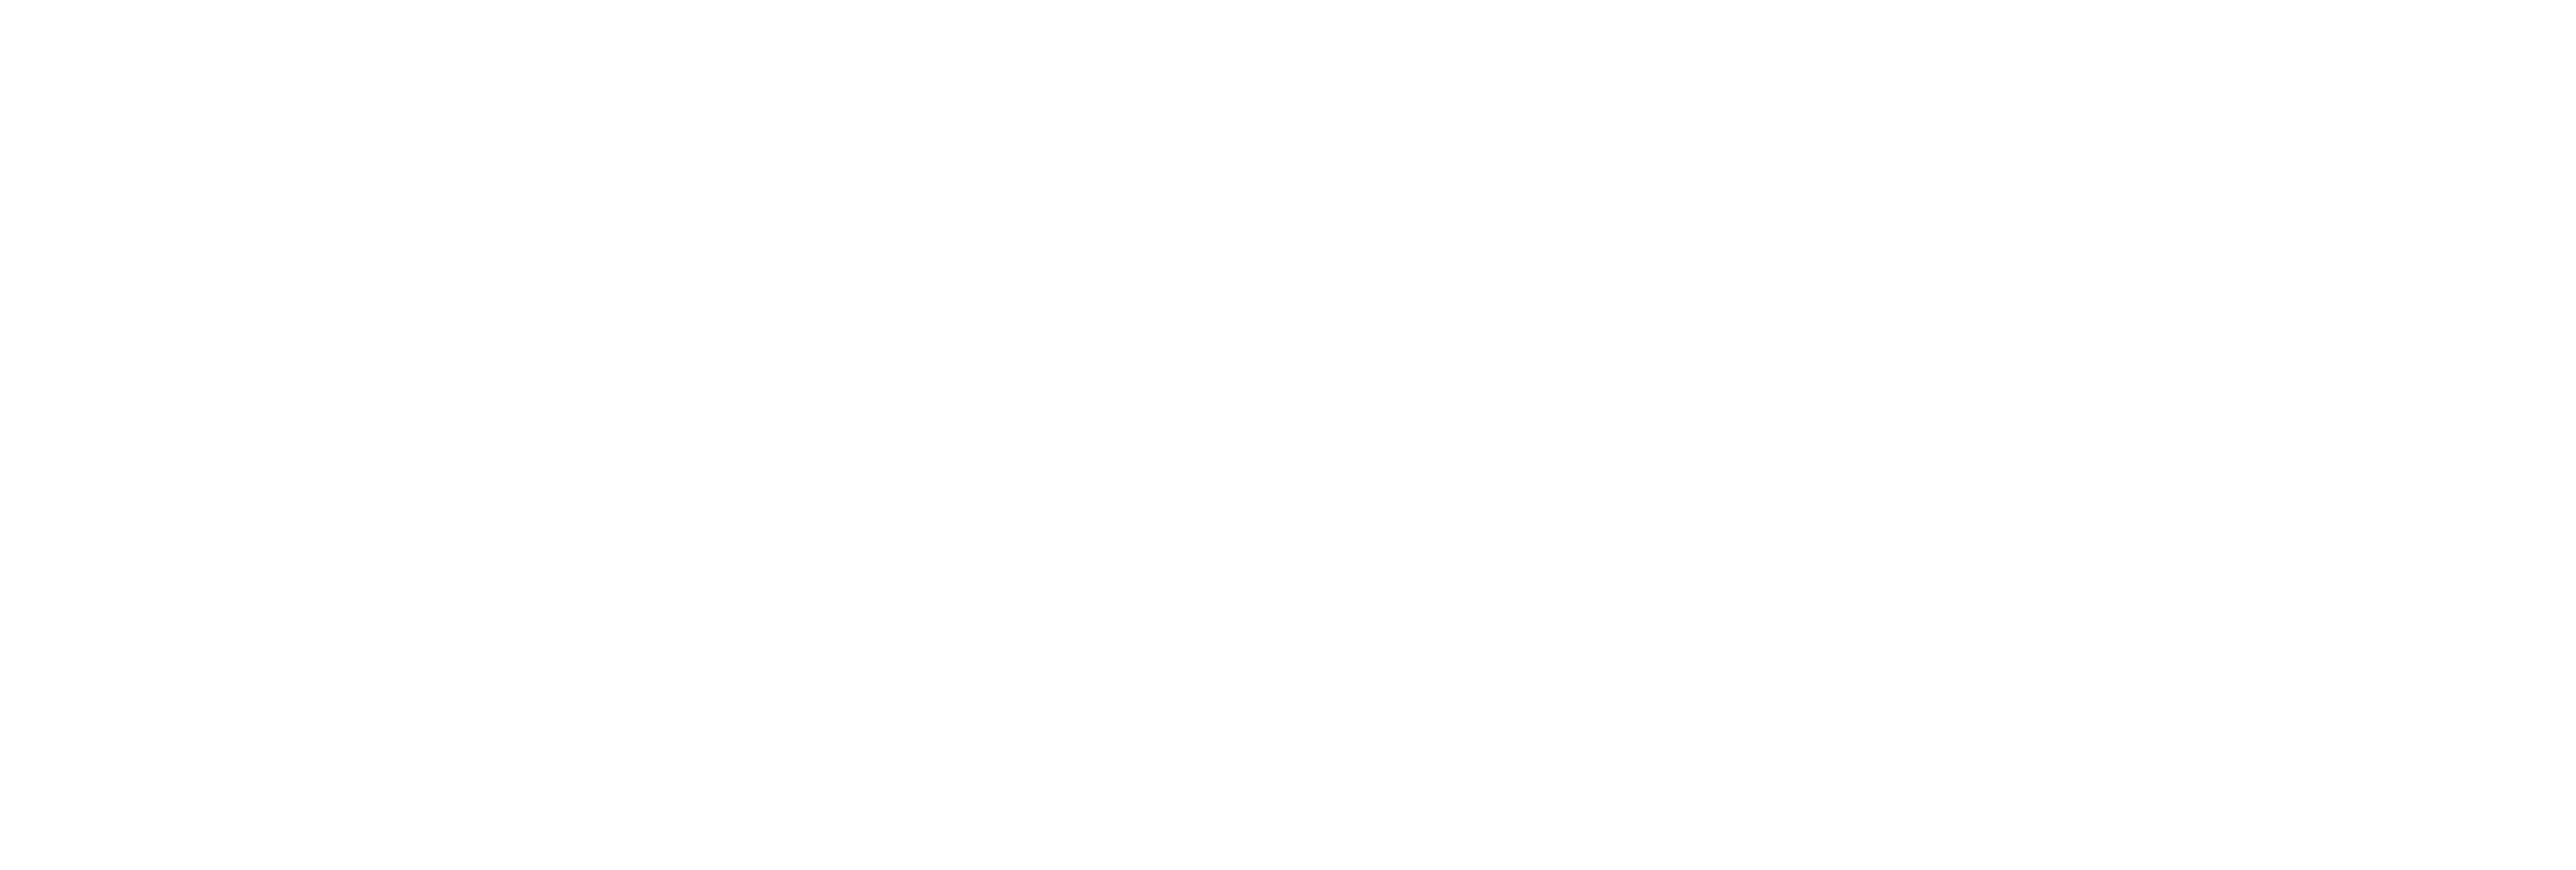 AniCura Kerkelanden - Hilversum logo